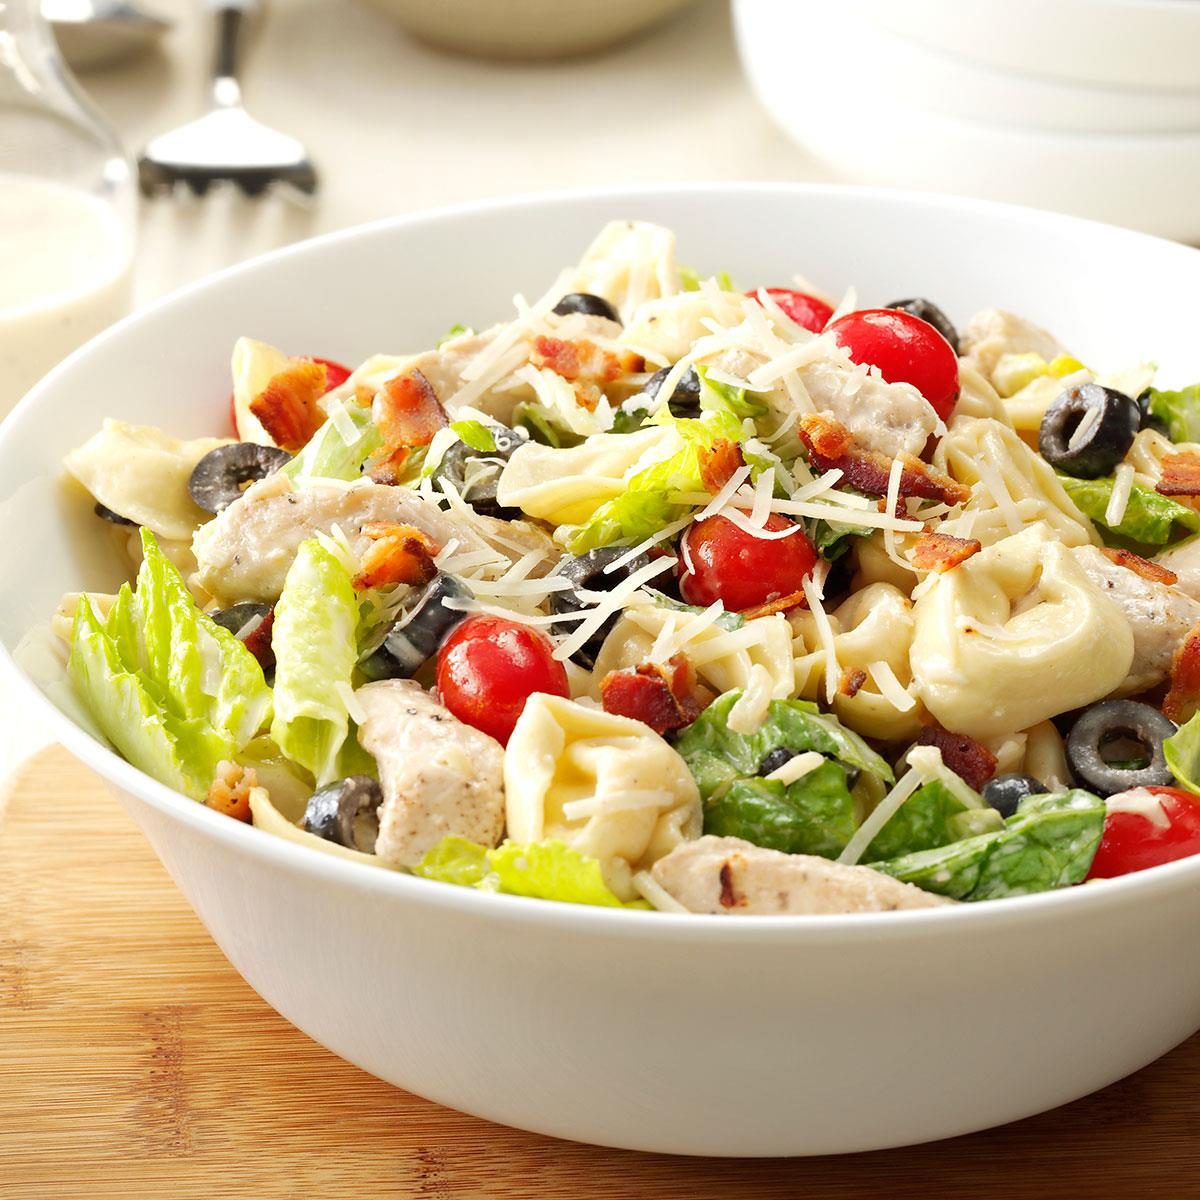 Tortellini & Chicken Caesar Salad Recipe: How to Make It